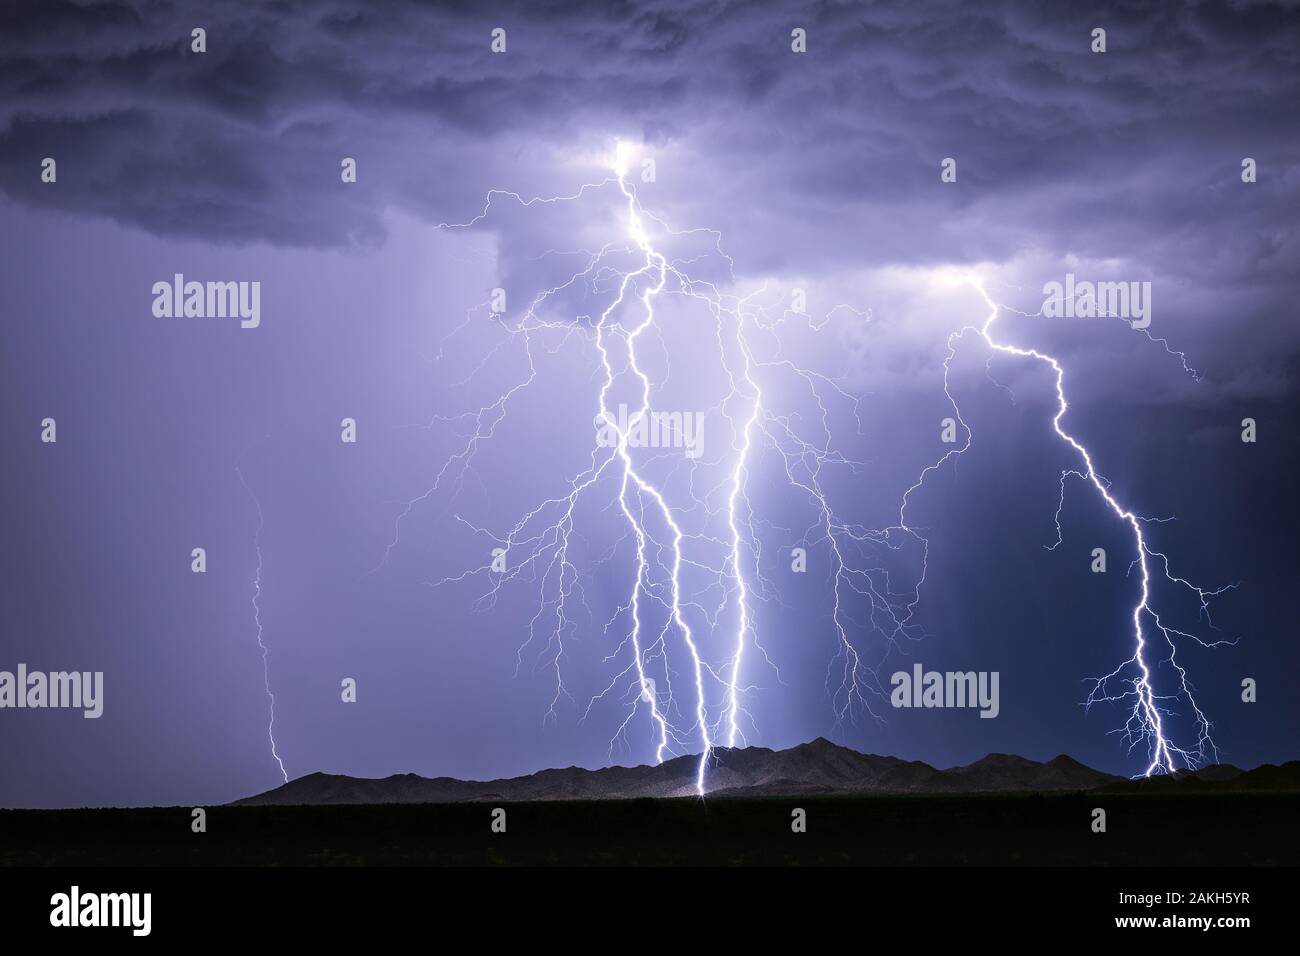 A series of lightning bolt strikes hitting a mountain in a storm near Phoenix, Arizona Stock Photo